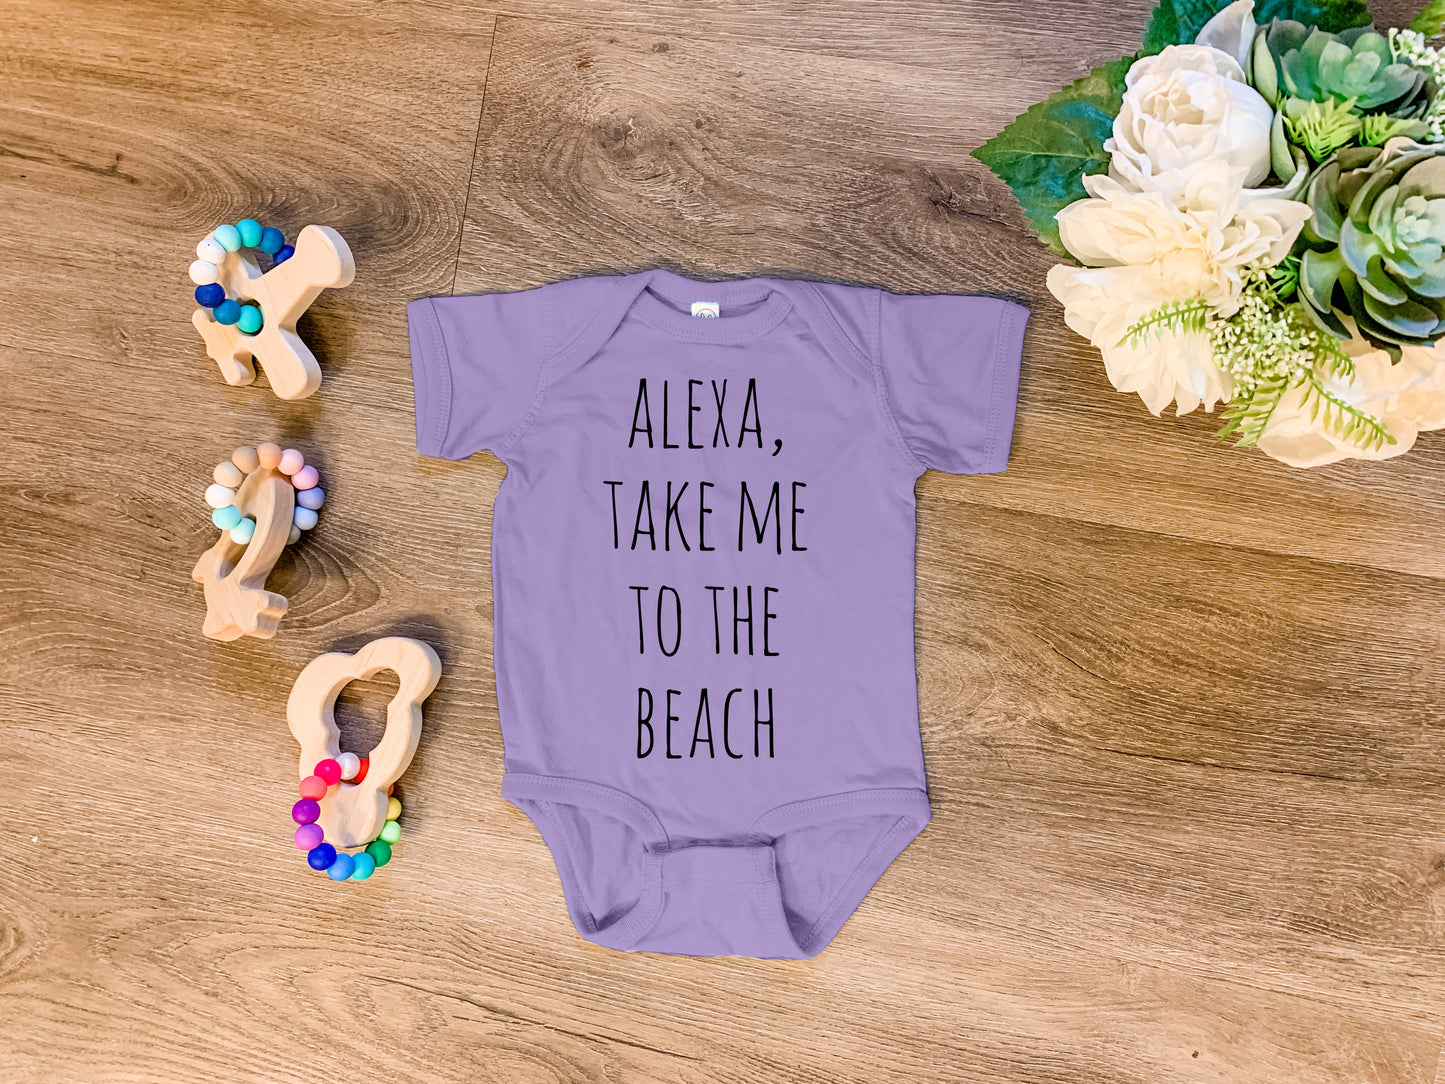 Alexa, Take Me To The Beach - Onesie - Heather Gray, Chill, or Lavender